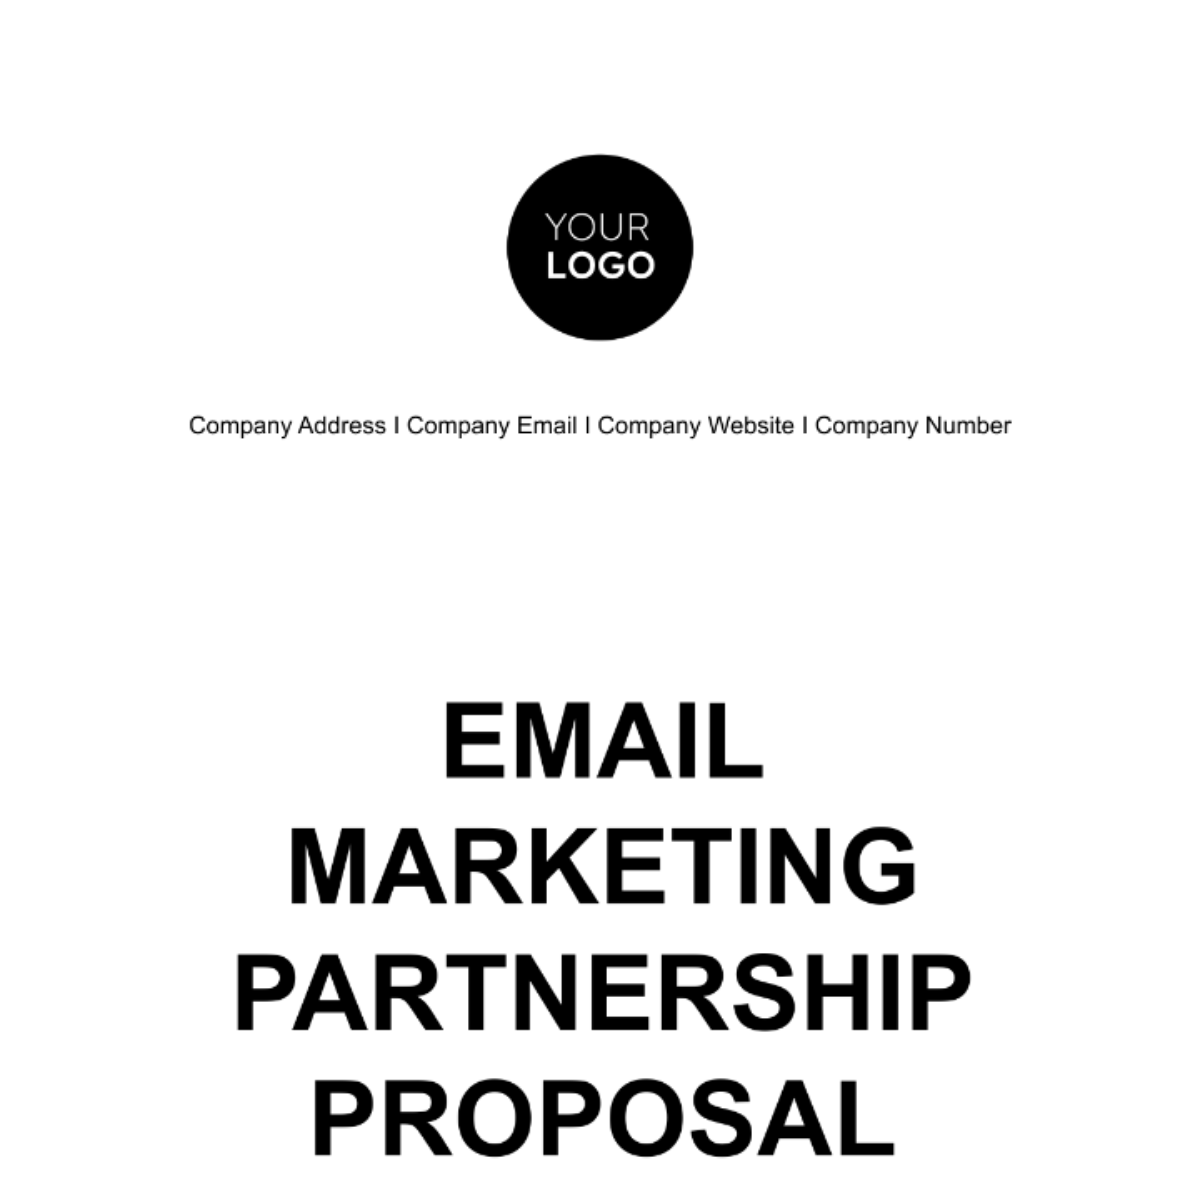 Email Marketing Partnership Proposal Template